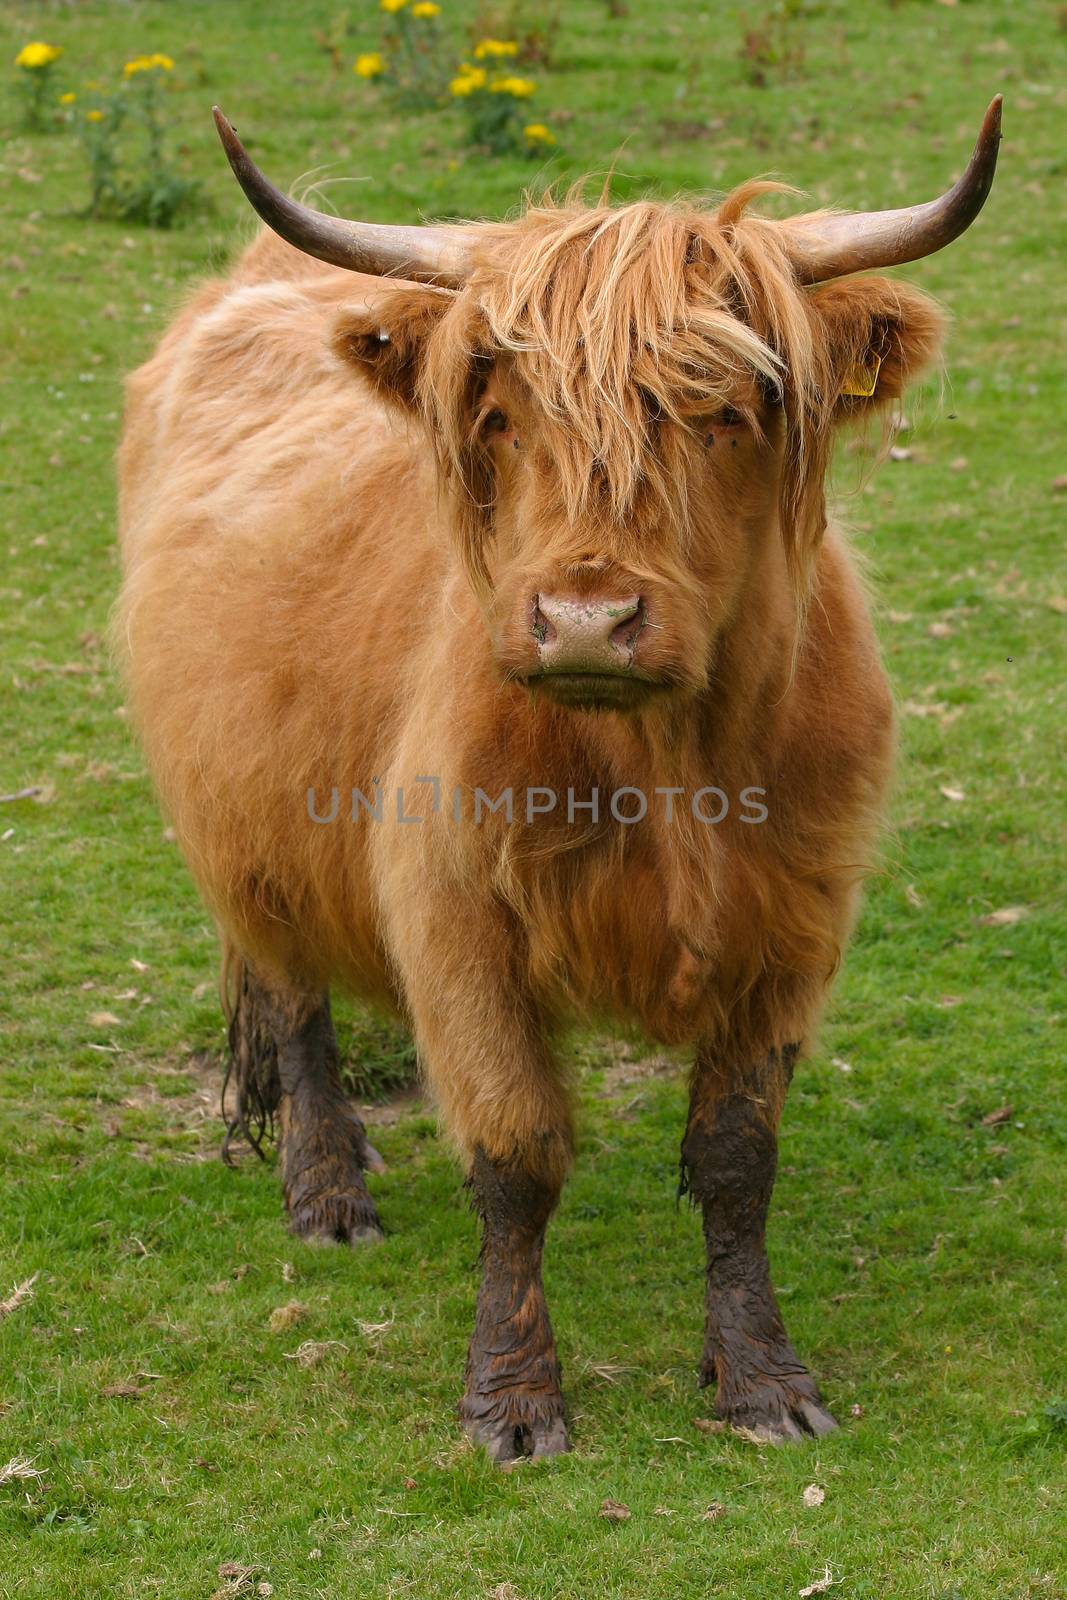 Highland aberdeen angus cow grazing green grass on a farm in Scotland